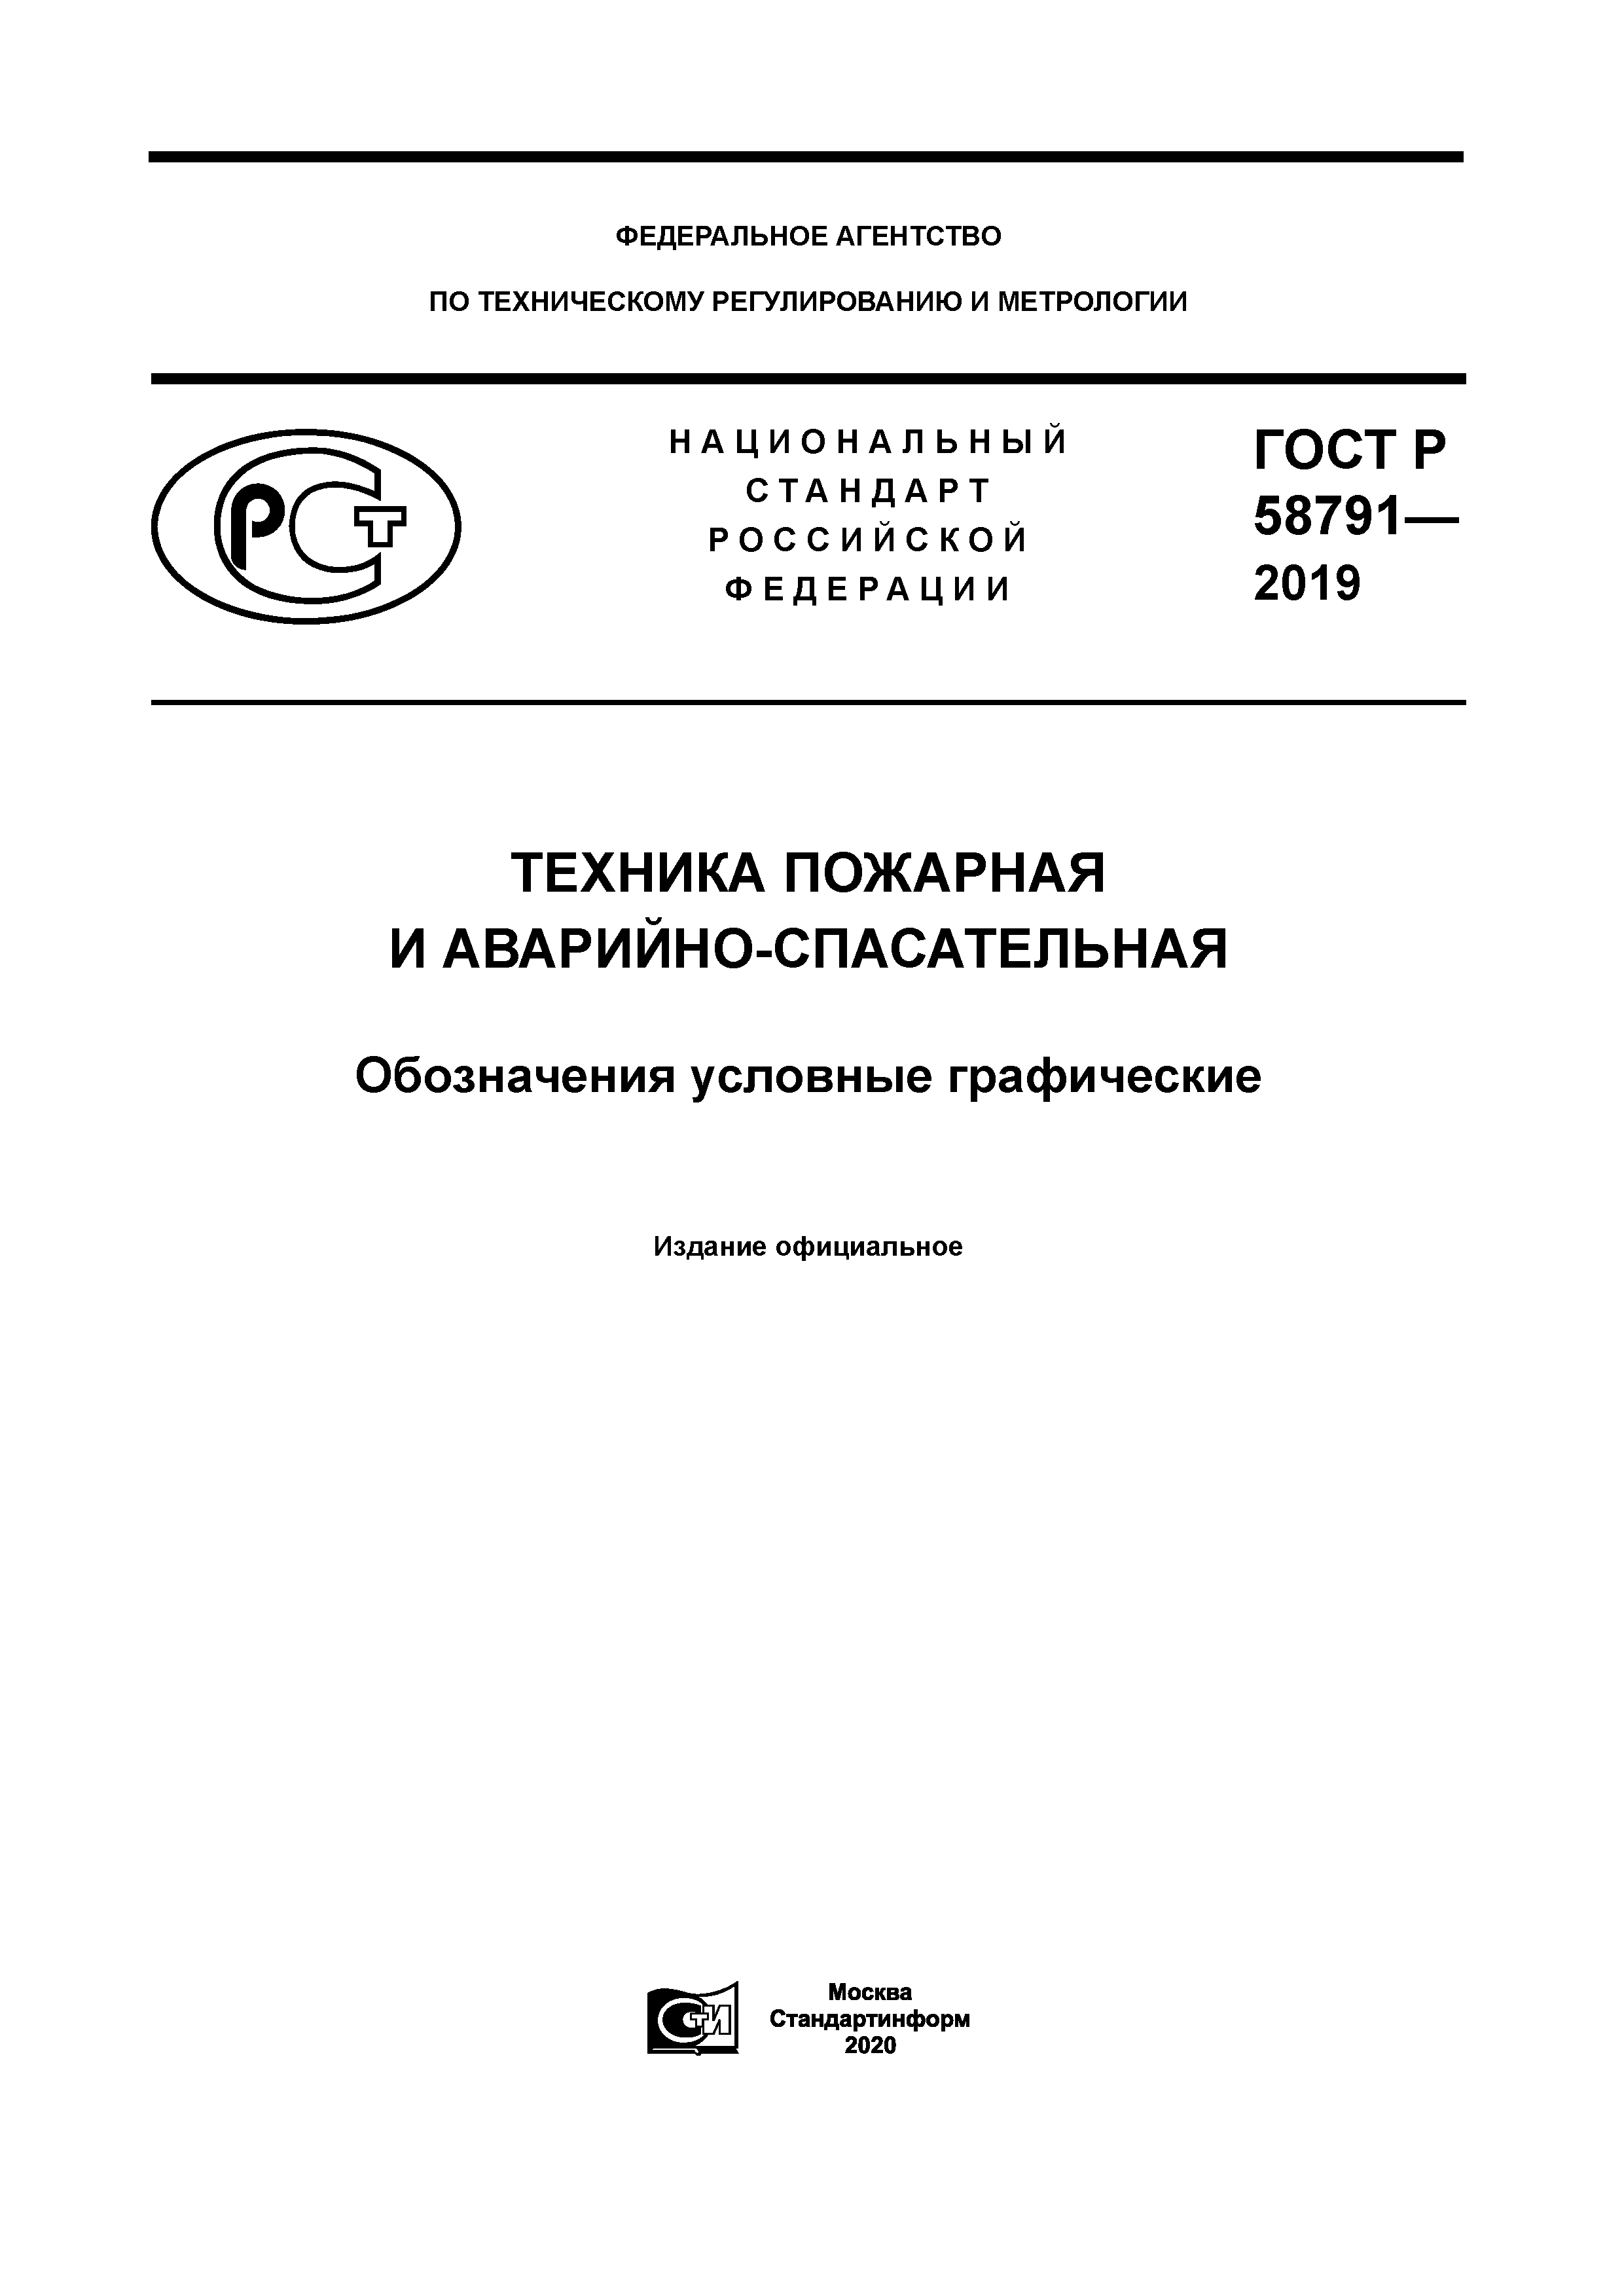 ГОСТ Р 58791-2019